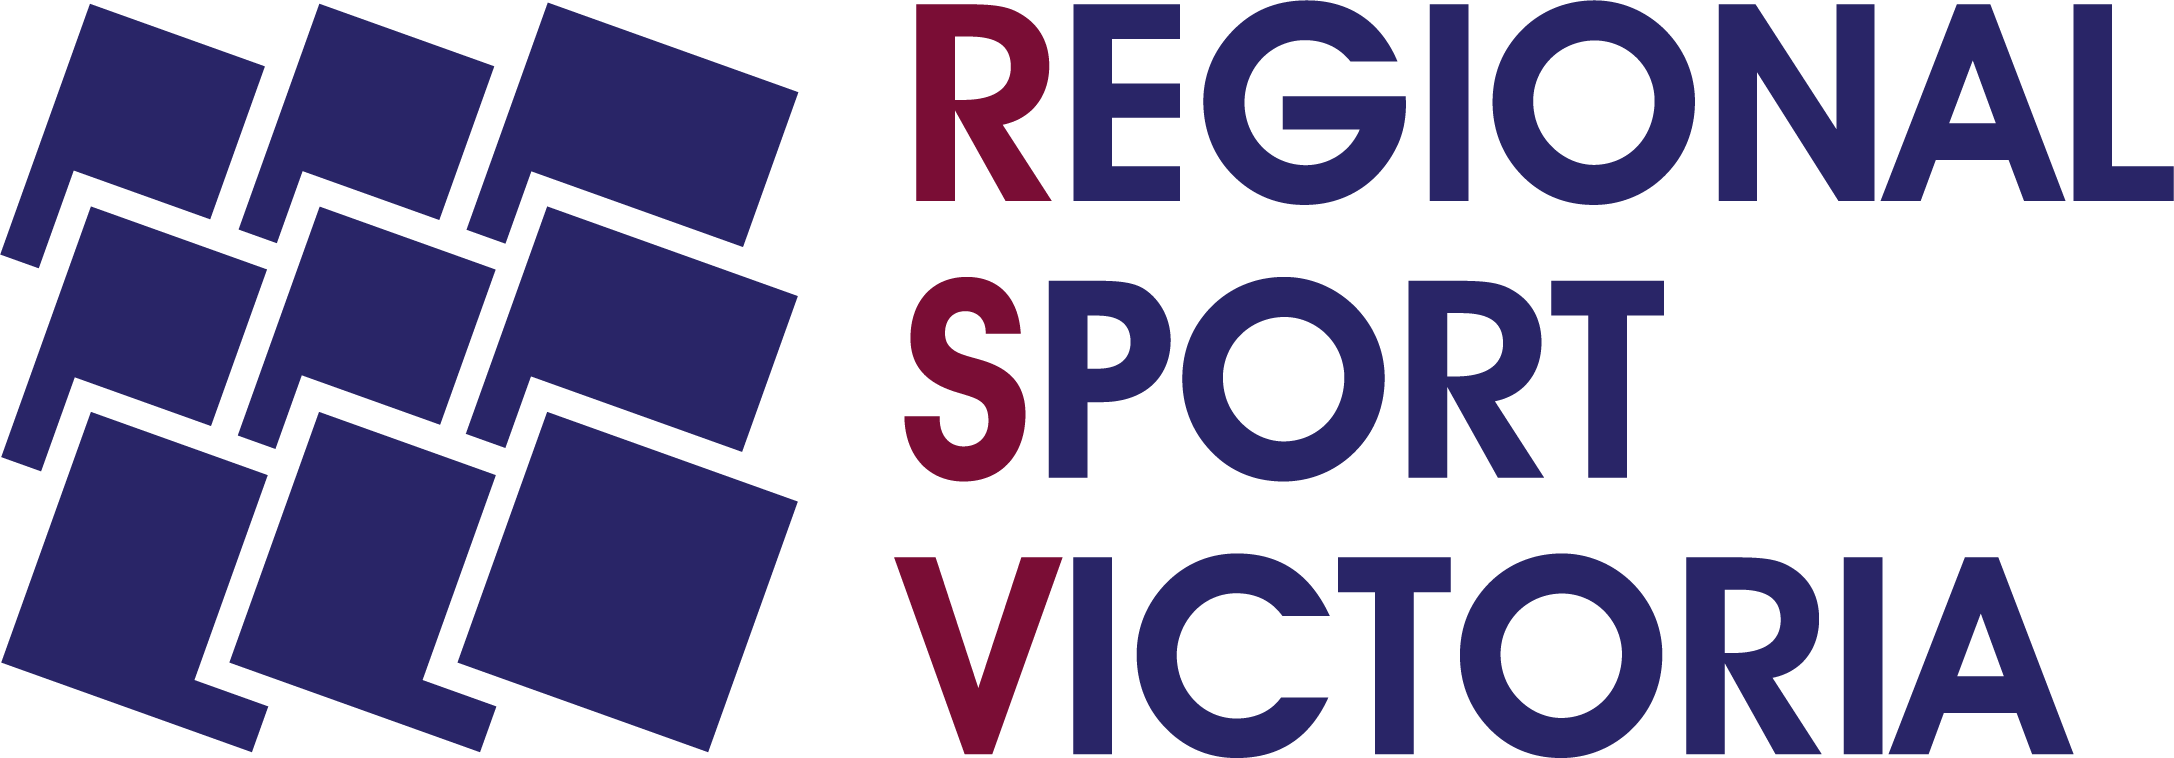 Regional Sport Victoria logo